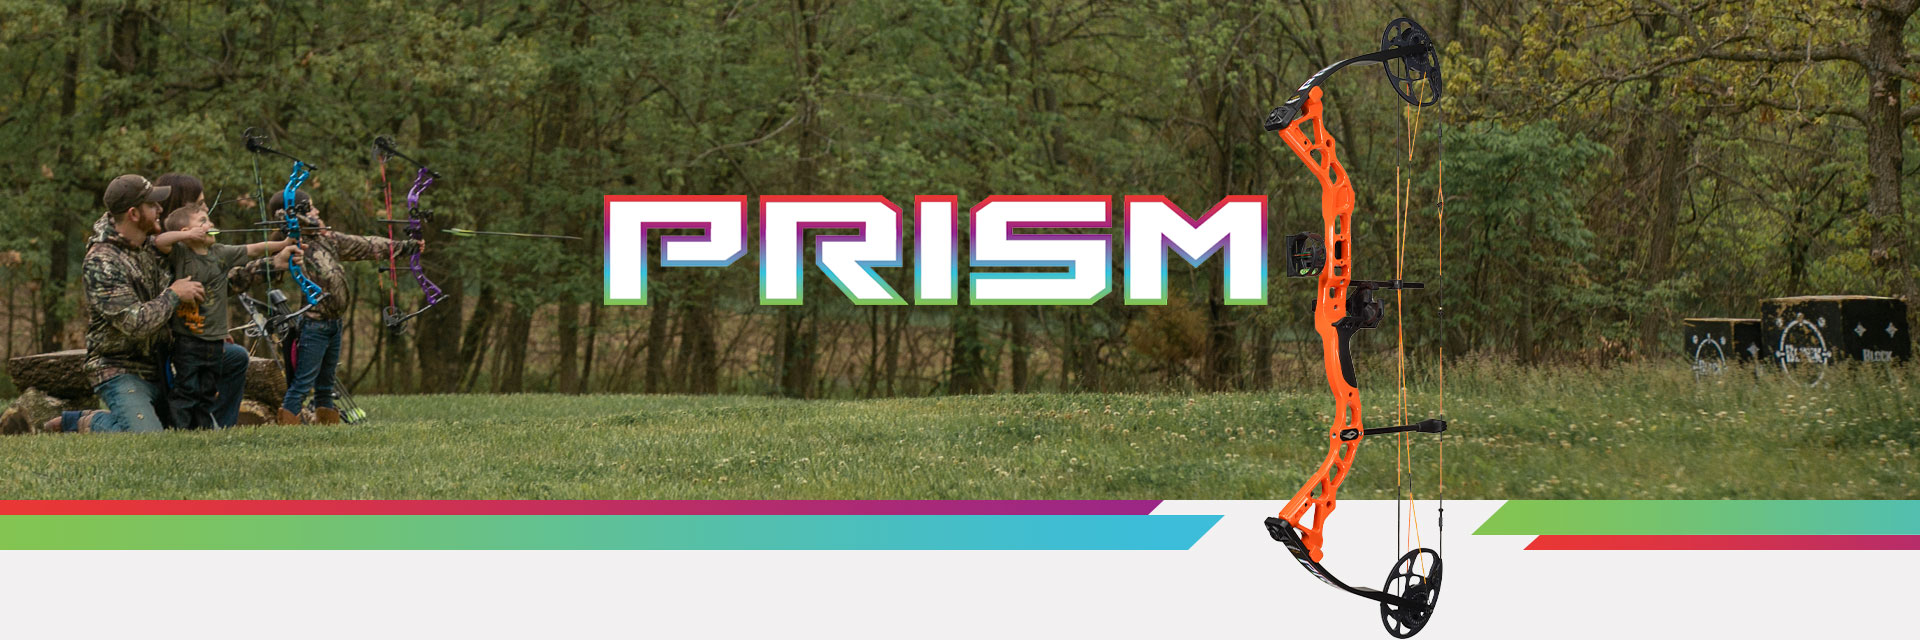 prism lifestyle header image